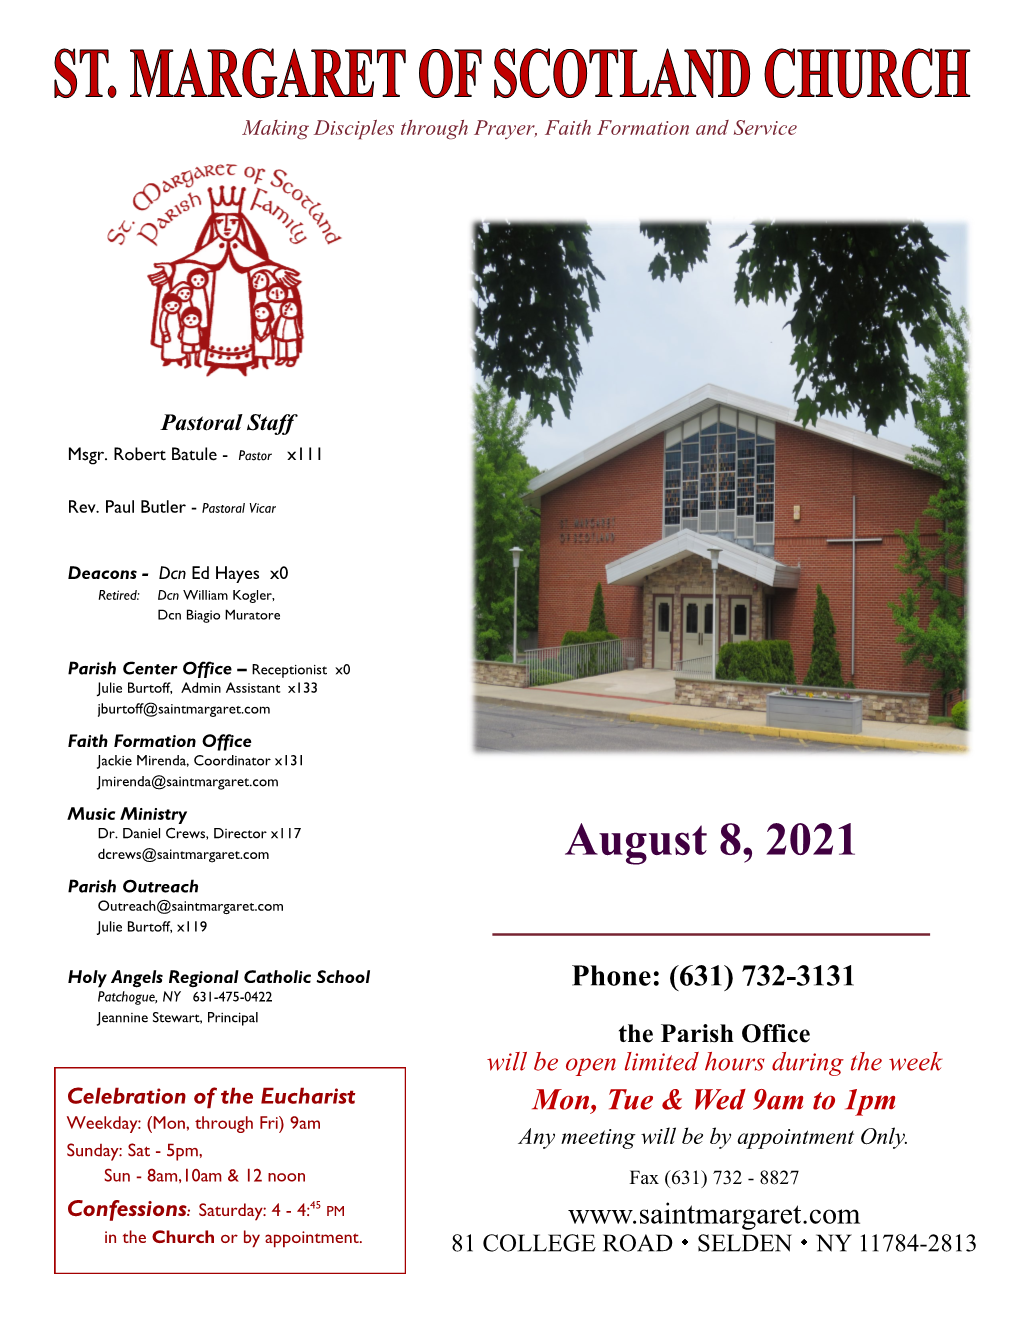 August 8, 2021 Parish Outreach Outreach@Saintmargaret.Com Julie Burtoff, X119